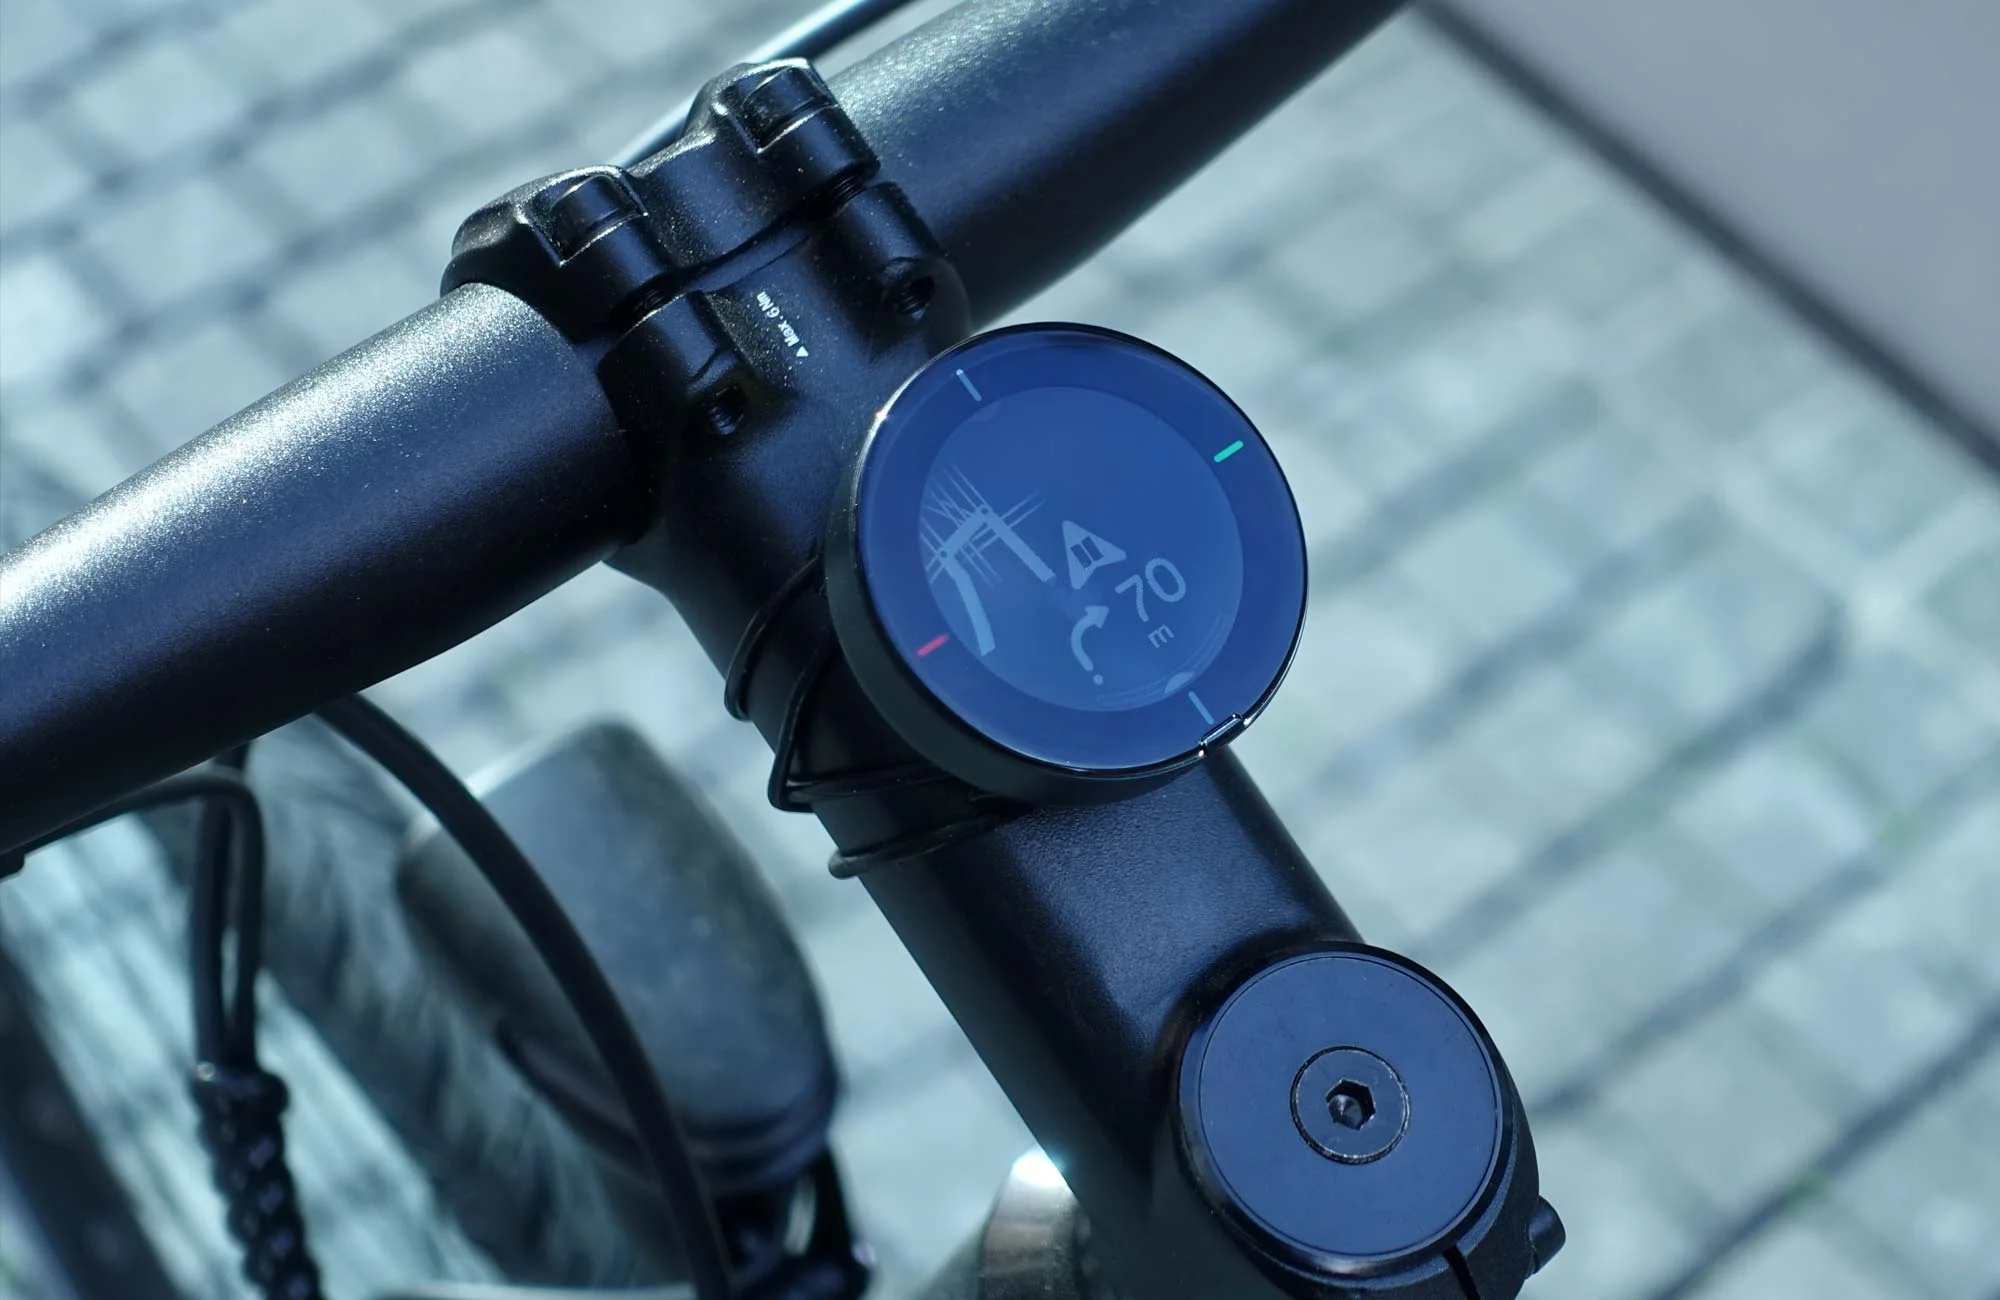 Hipper Fahrrad Kompass Beeline führt intuitiv ans Ziel